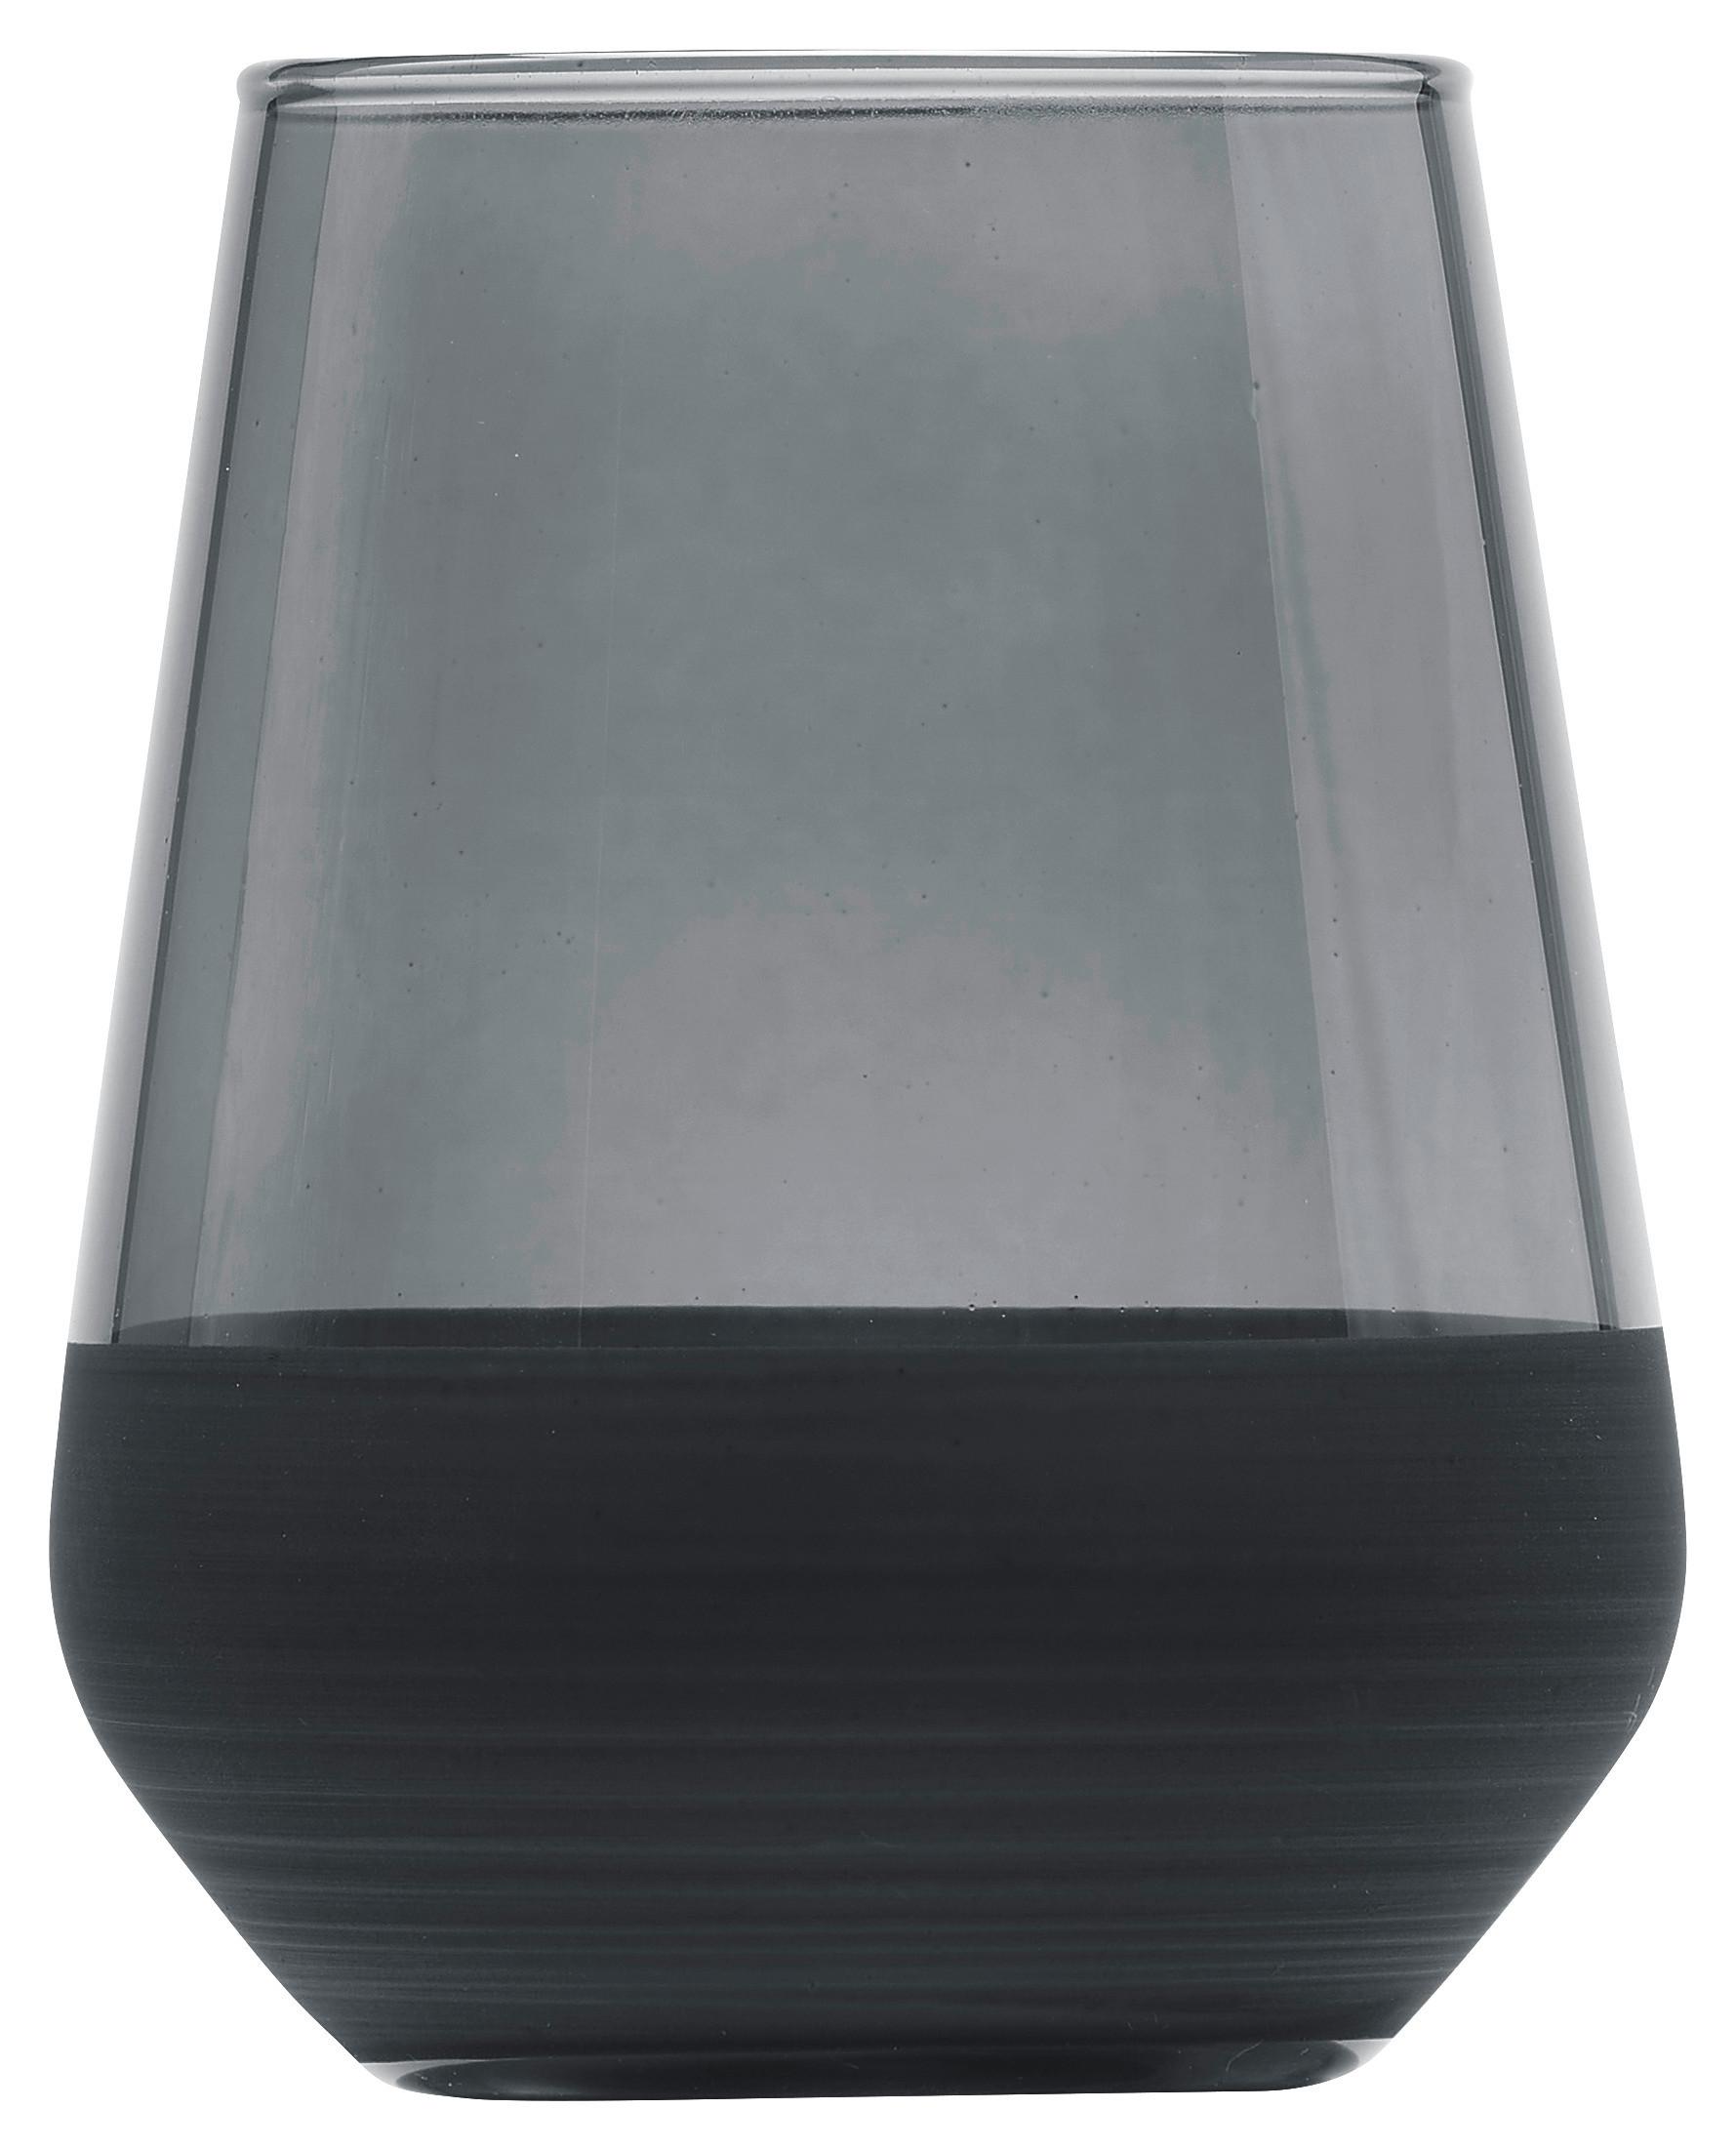 Sklenička Black, 425ml - černá, Moderní, sklo (6,8/11cm) - Premium Living